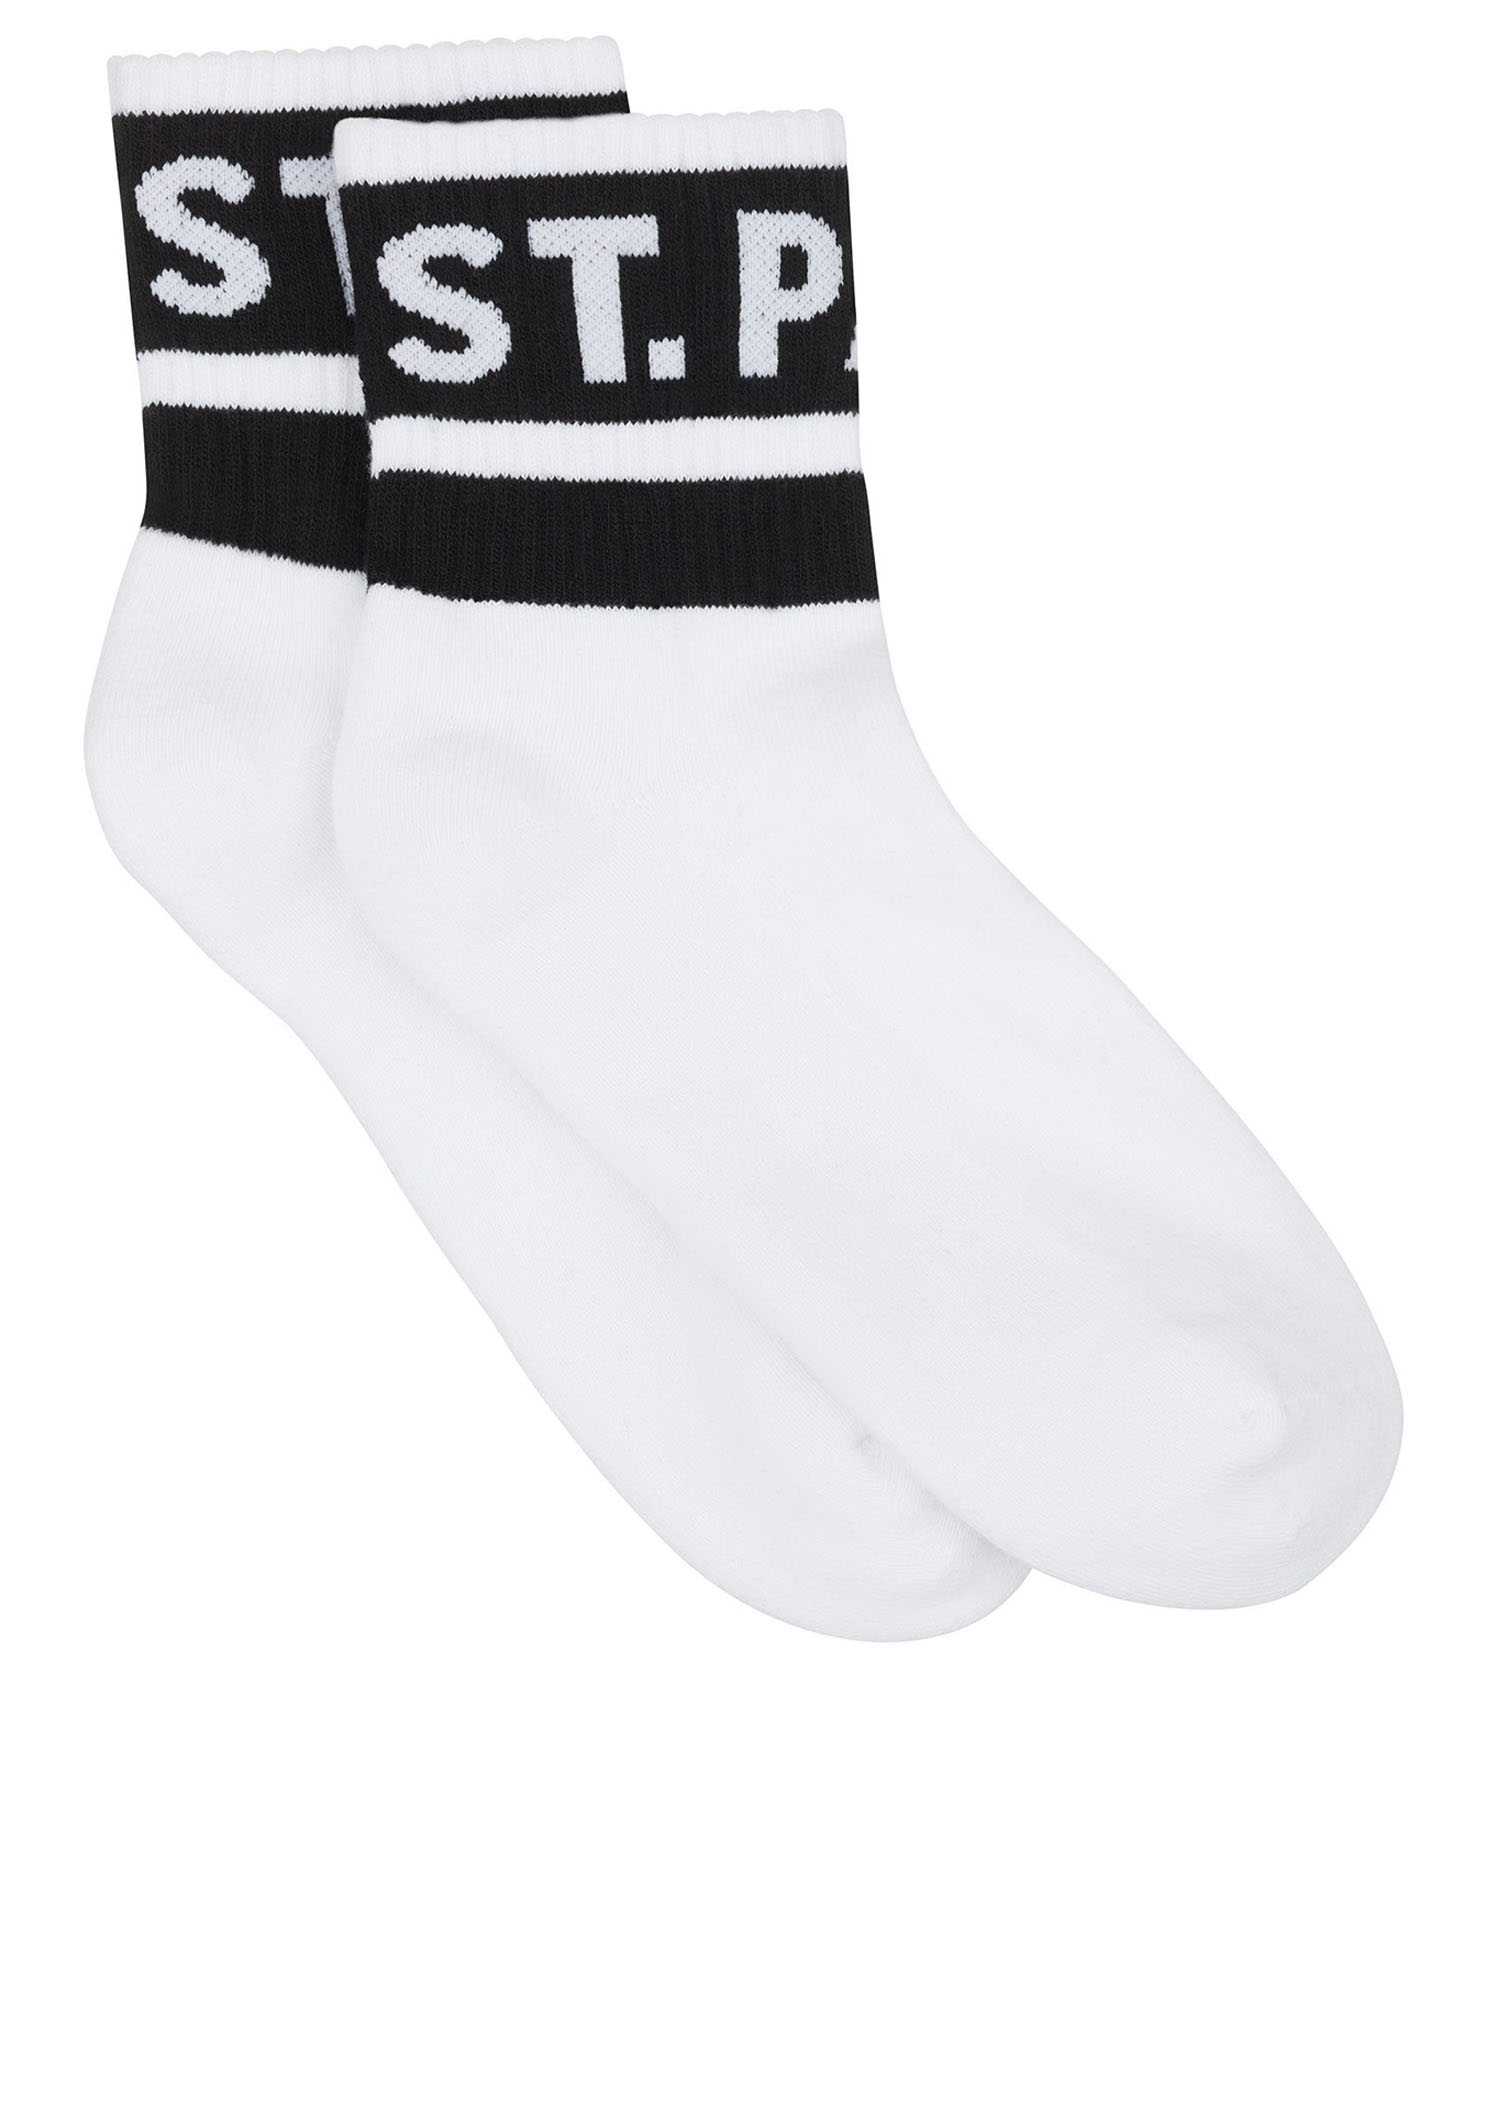 Socken "St. Pauli" - kurz